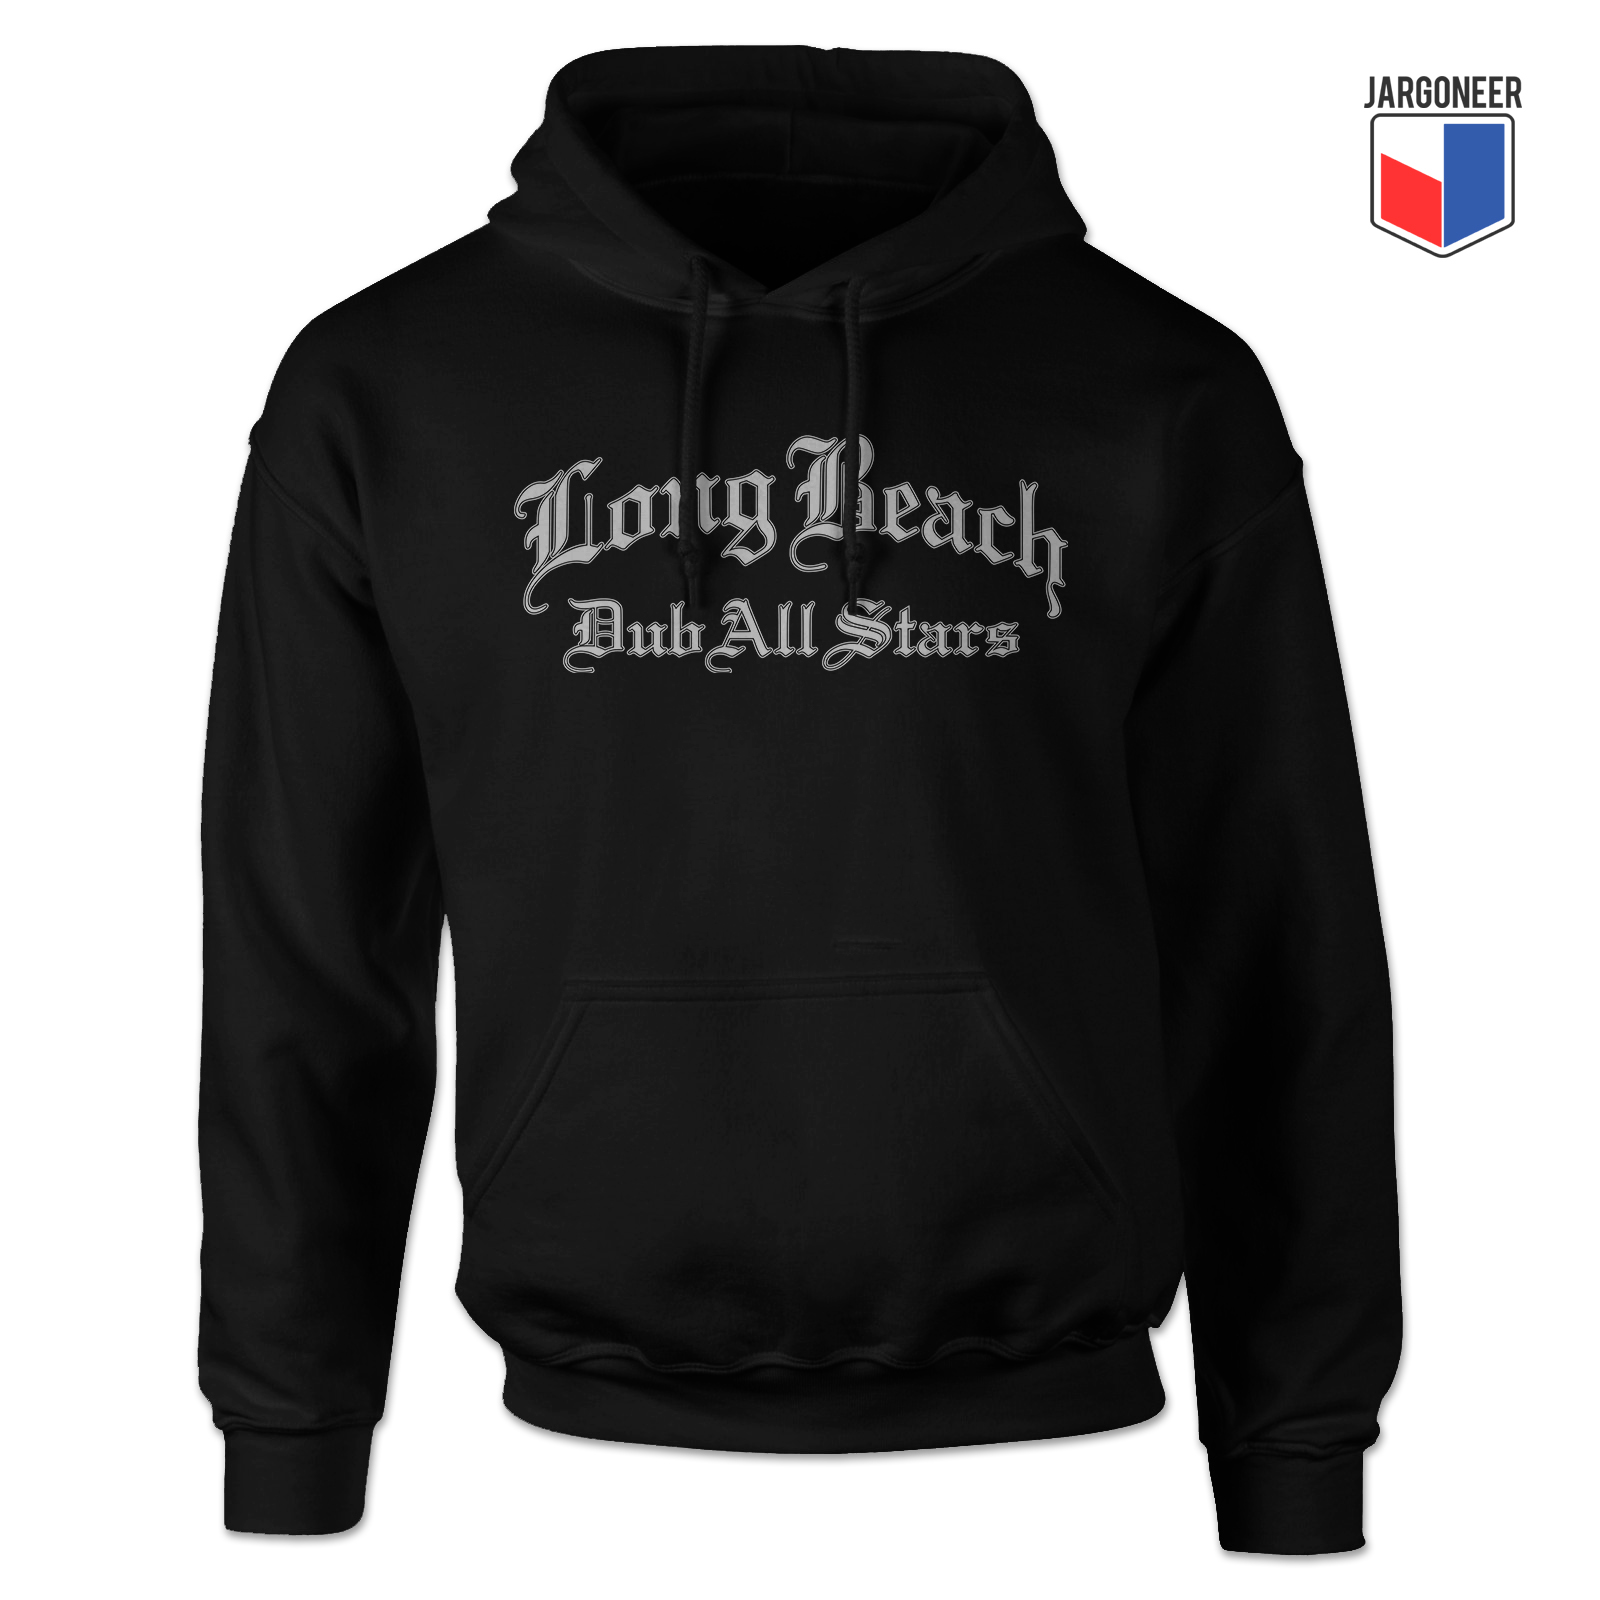 Long Beach Dub Allstars Black Hoody - Shop Unique Graphic Cool Shirt Designs